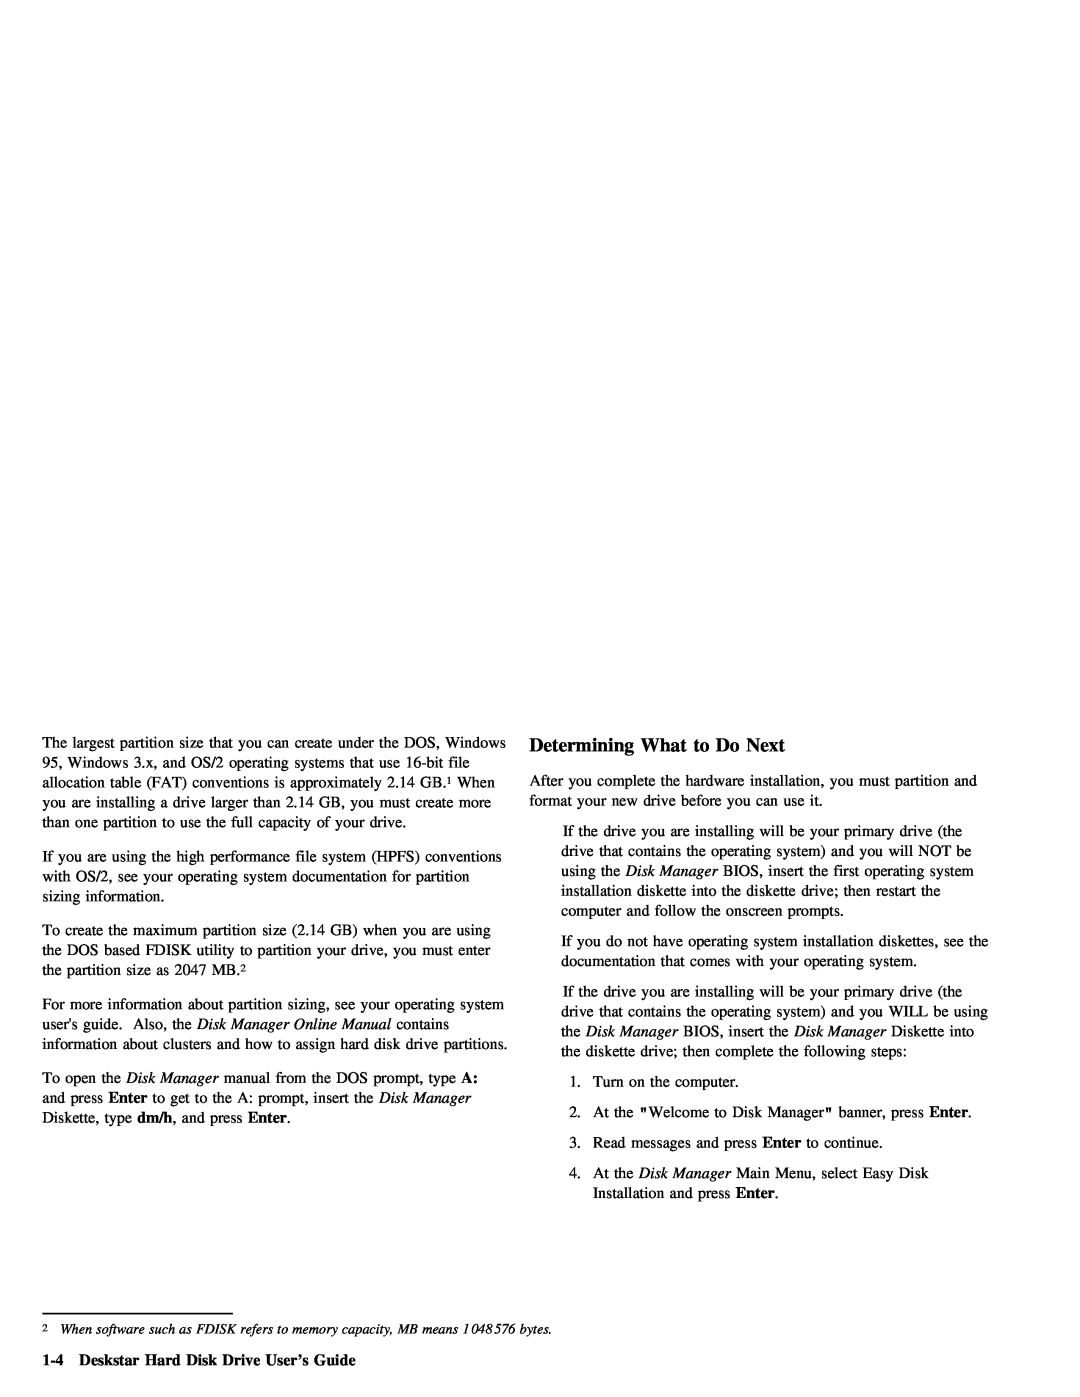 IBM ATA-3 manual Next, Enter, Deskstar Hard Disk Drive User’s Guide 